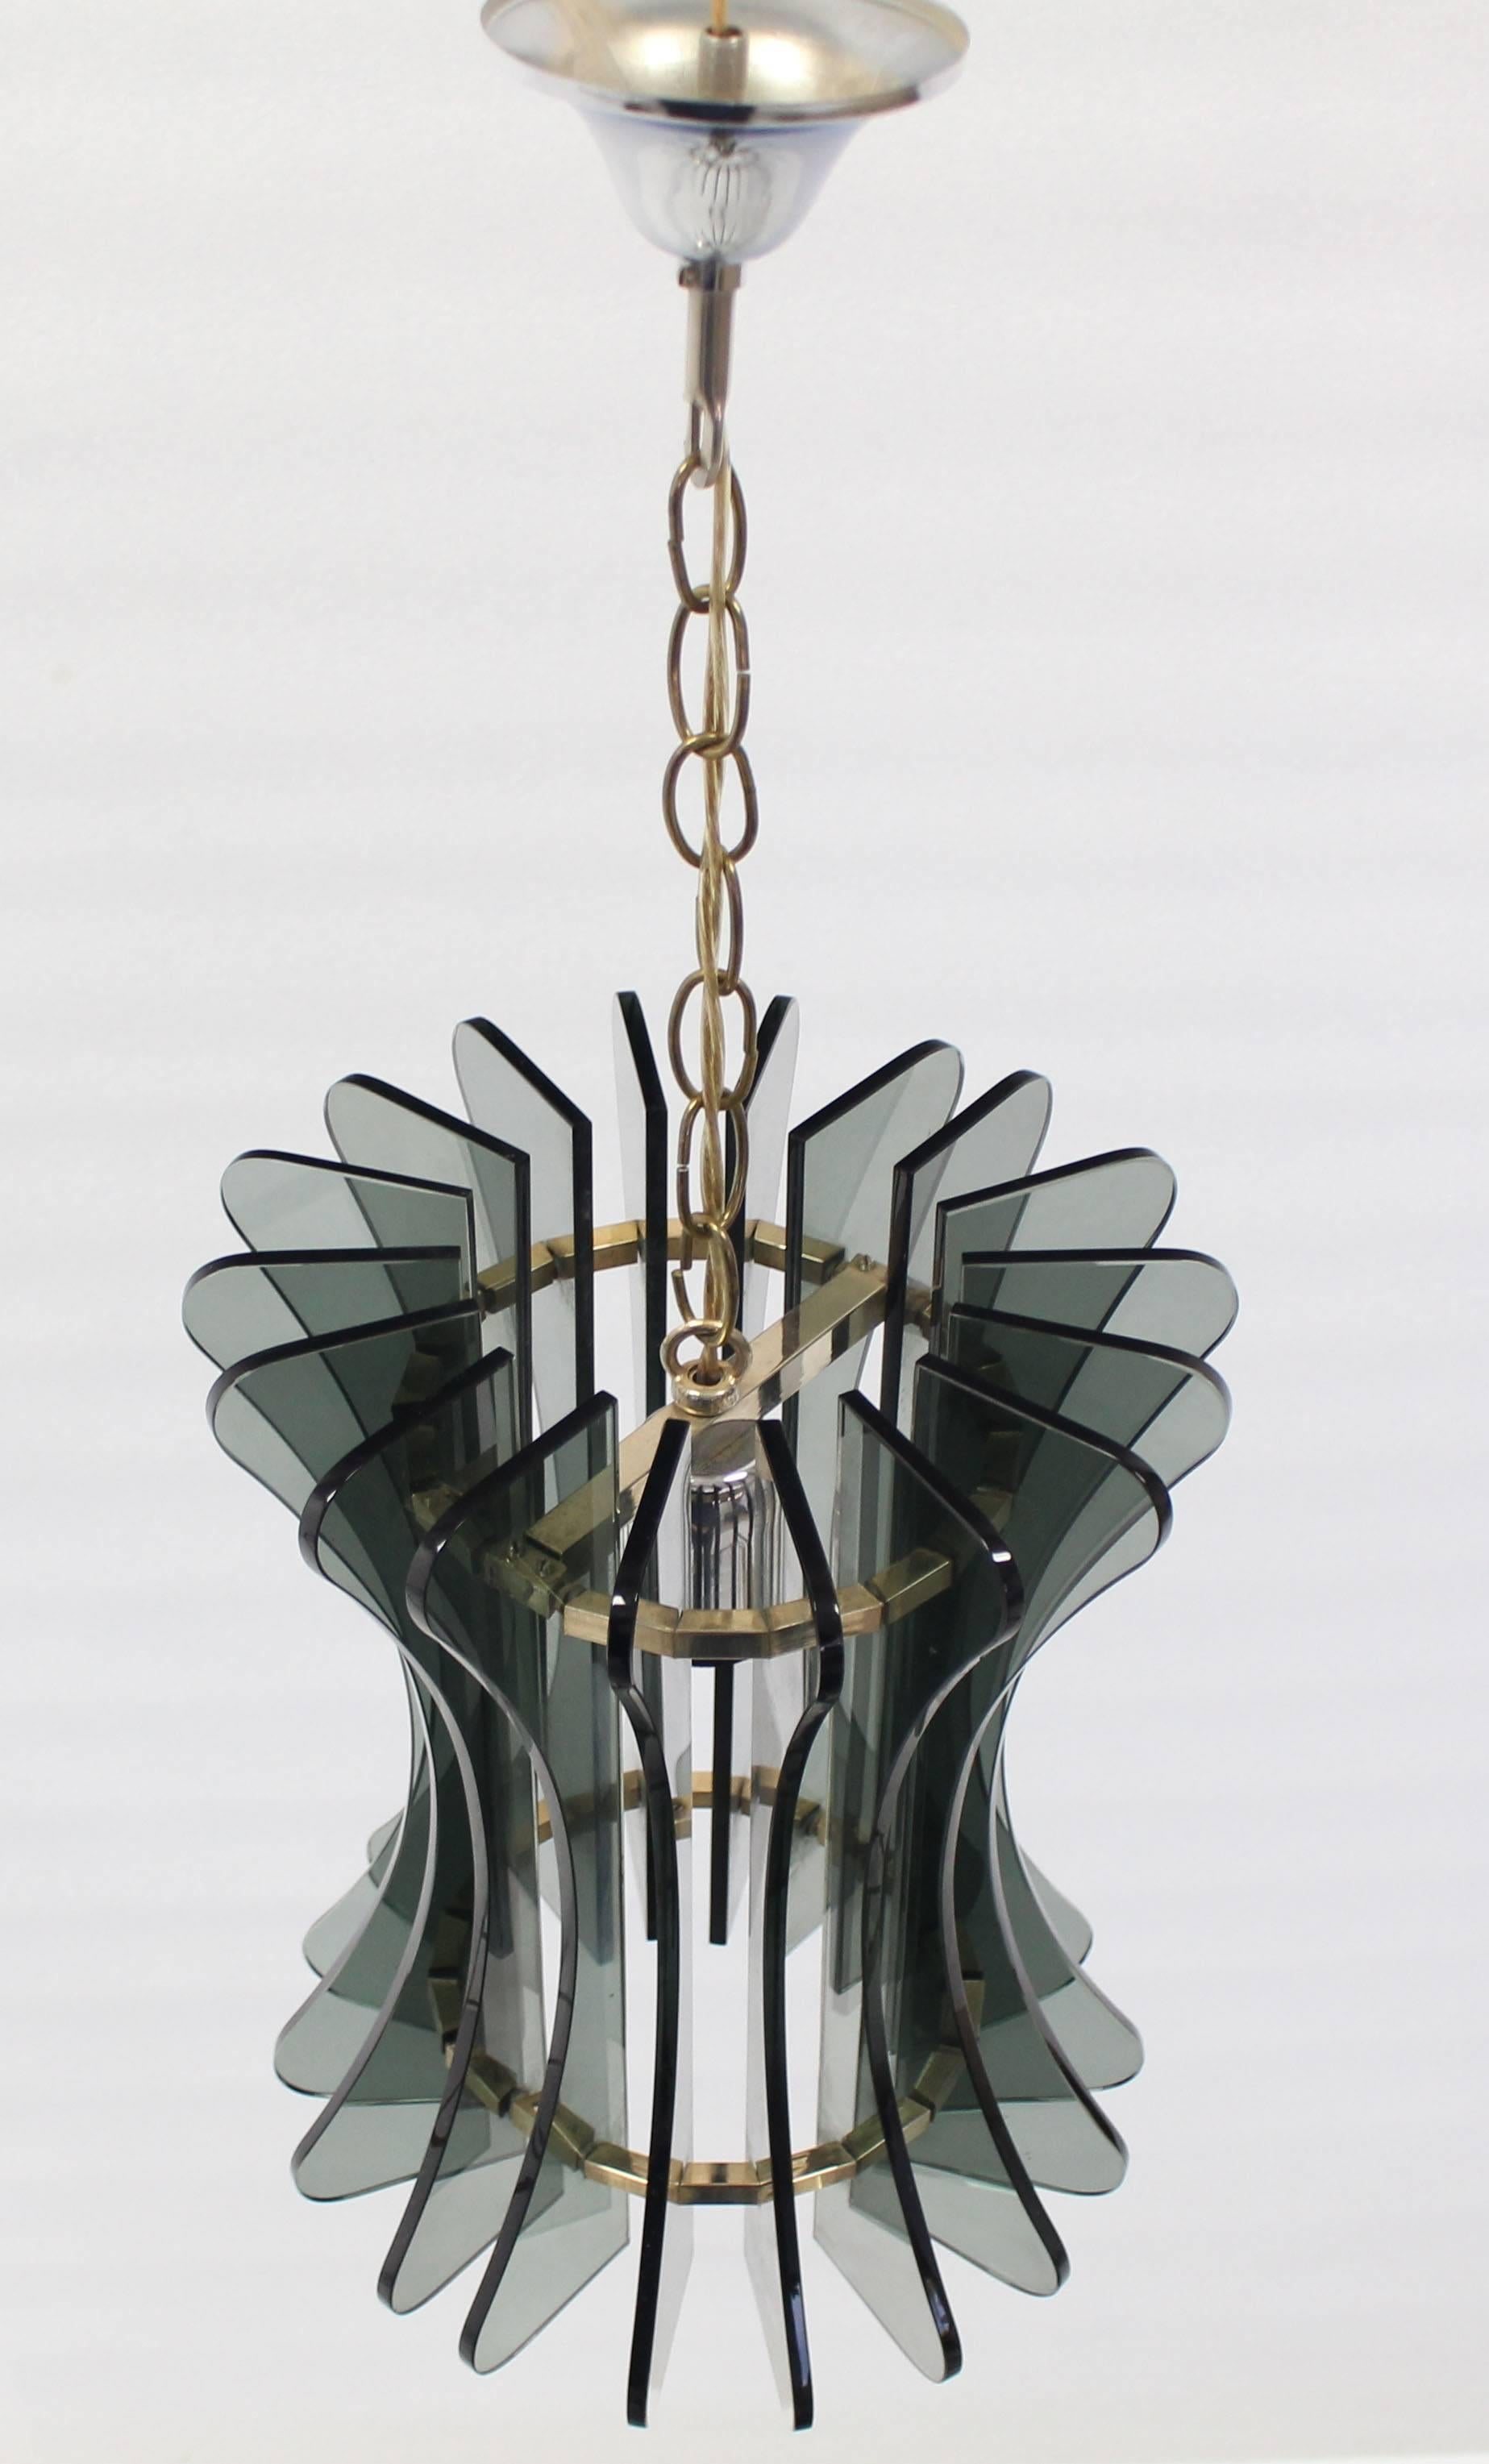 Veca Italian Mid-Century Modern Pendant Light Fixture Chandelier For Sale 4